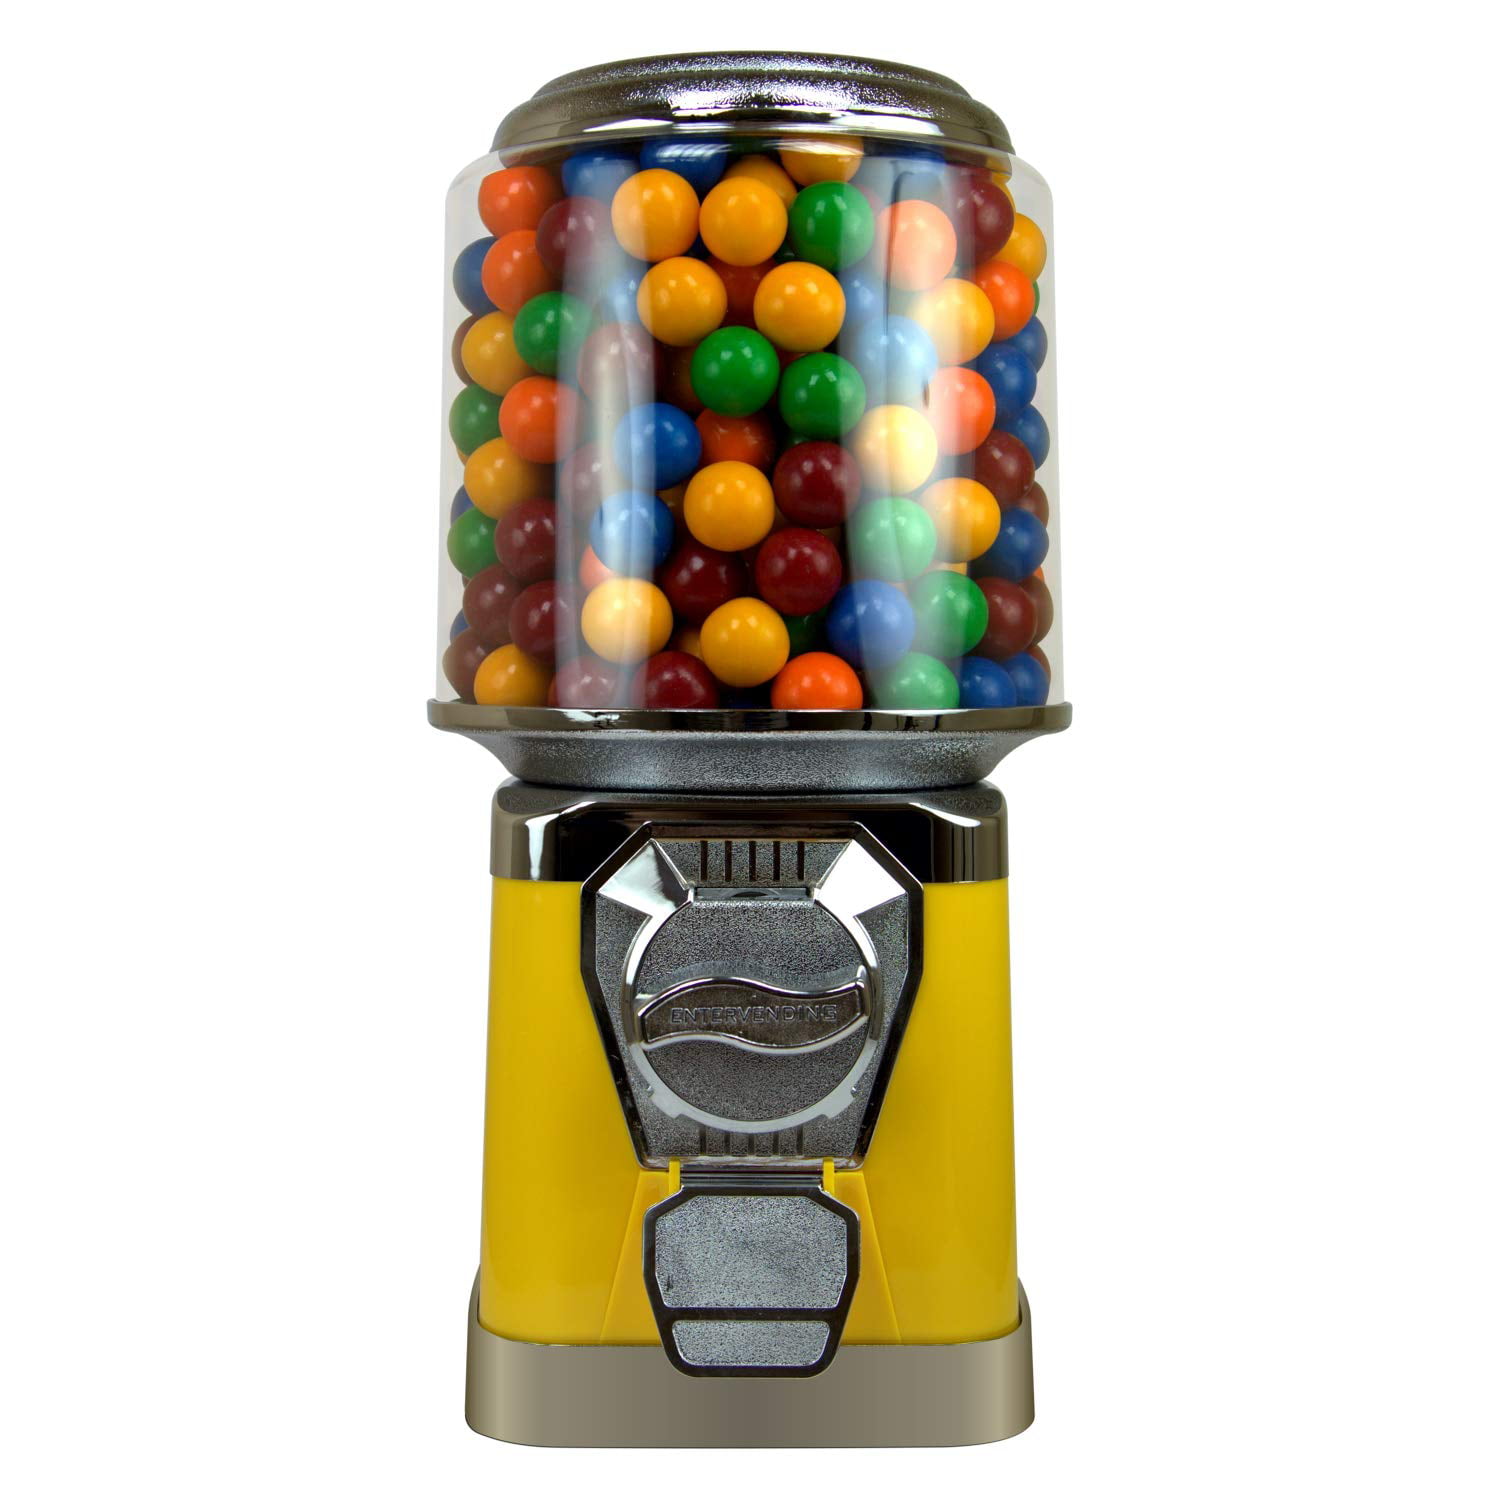 Gumball Vending Machine Gum Dispenser Toy Fun 80g Bubble Gum Included 